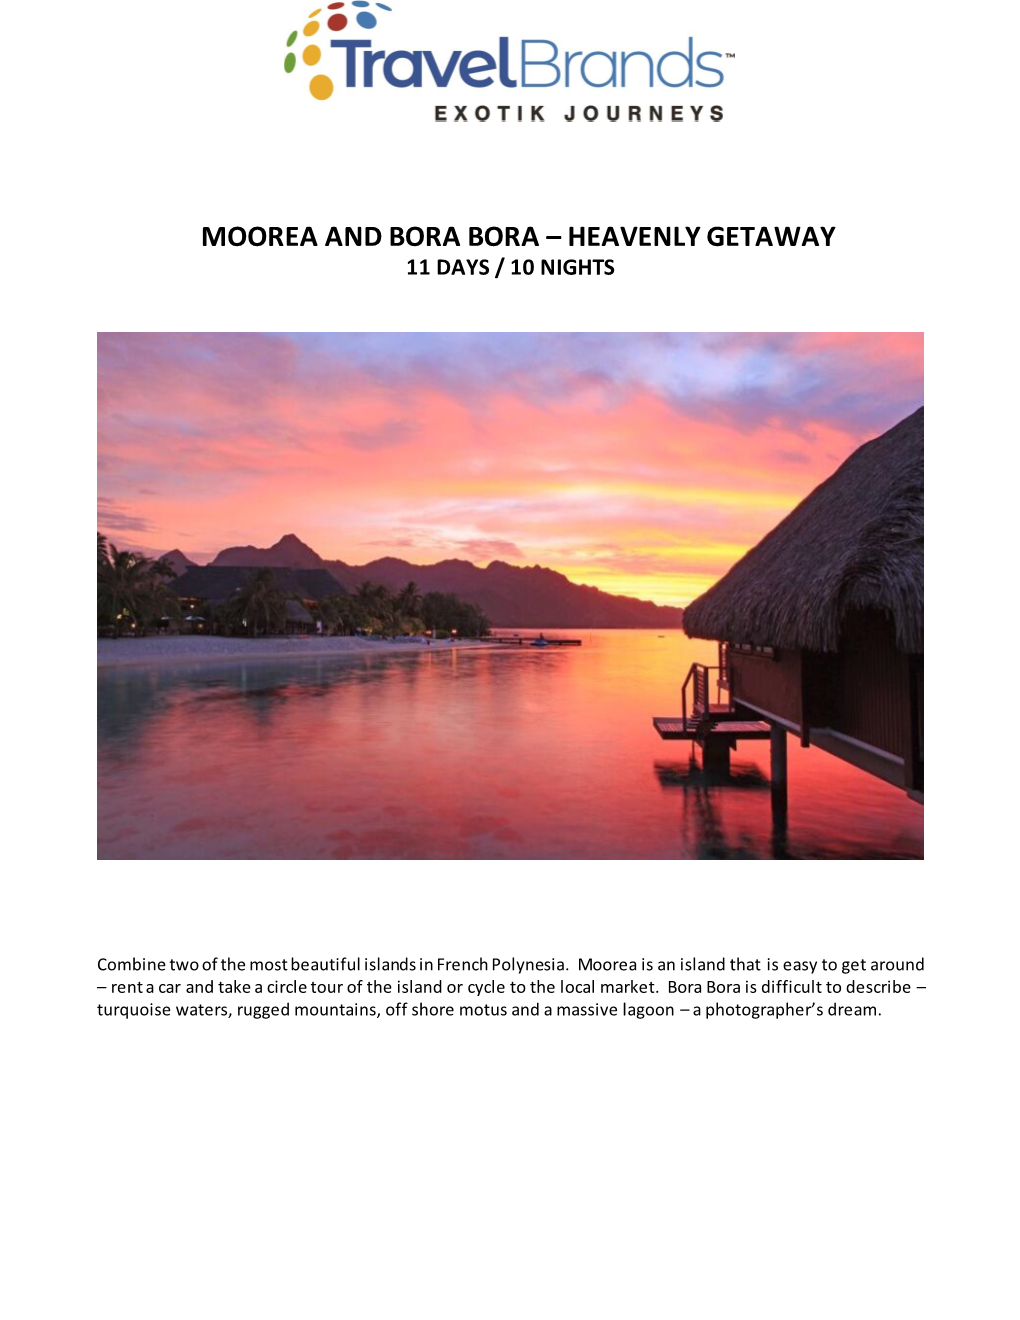 Moorea and Bora Bora – Heavenly Getaway 11 Days / 10 Nights